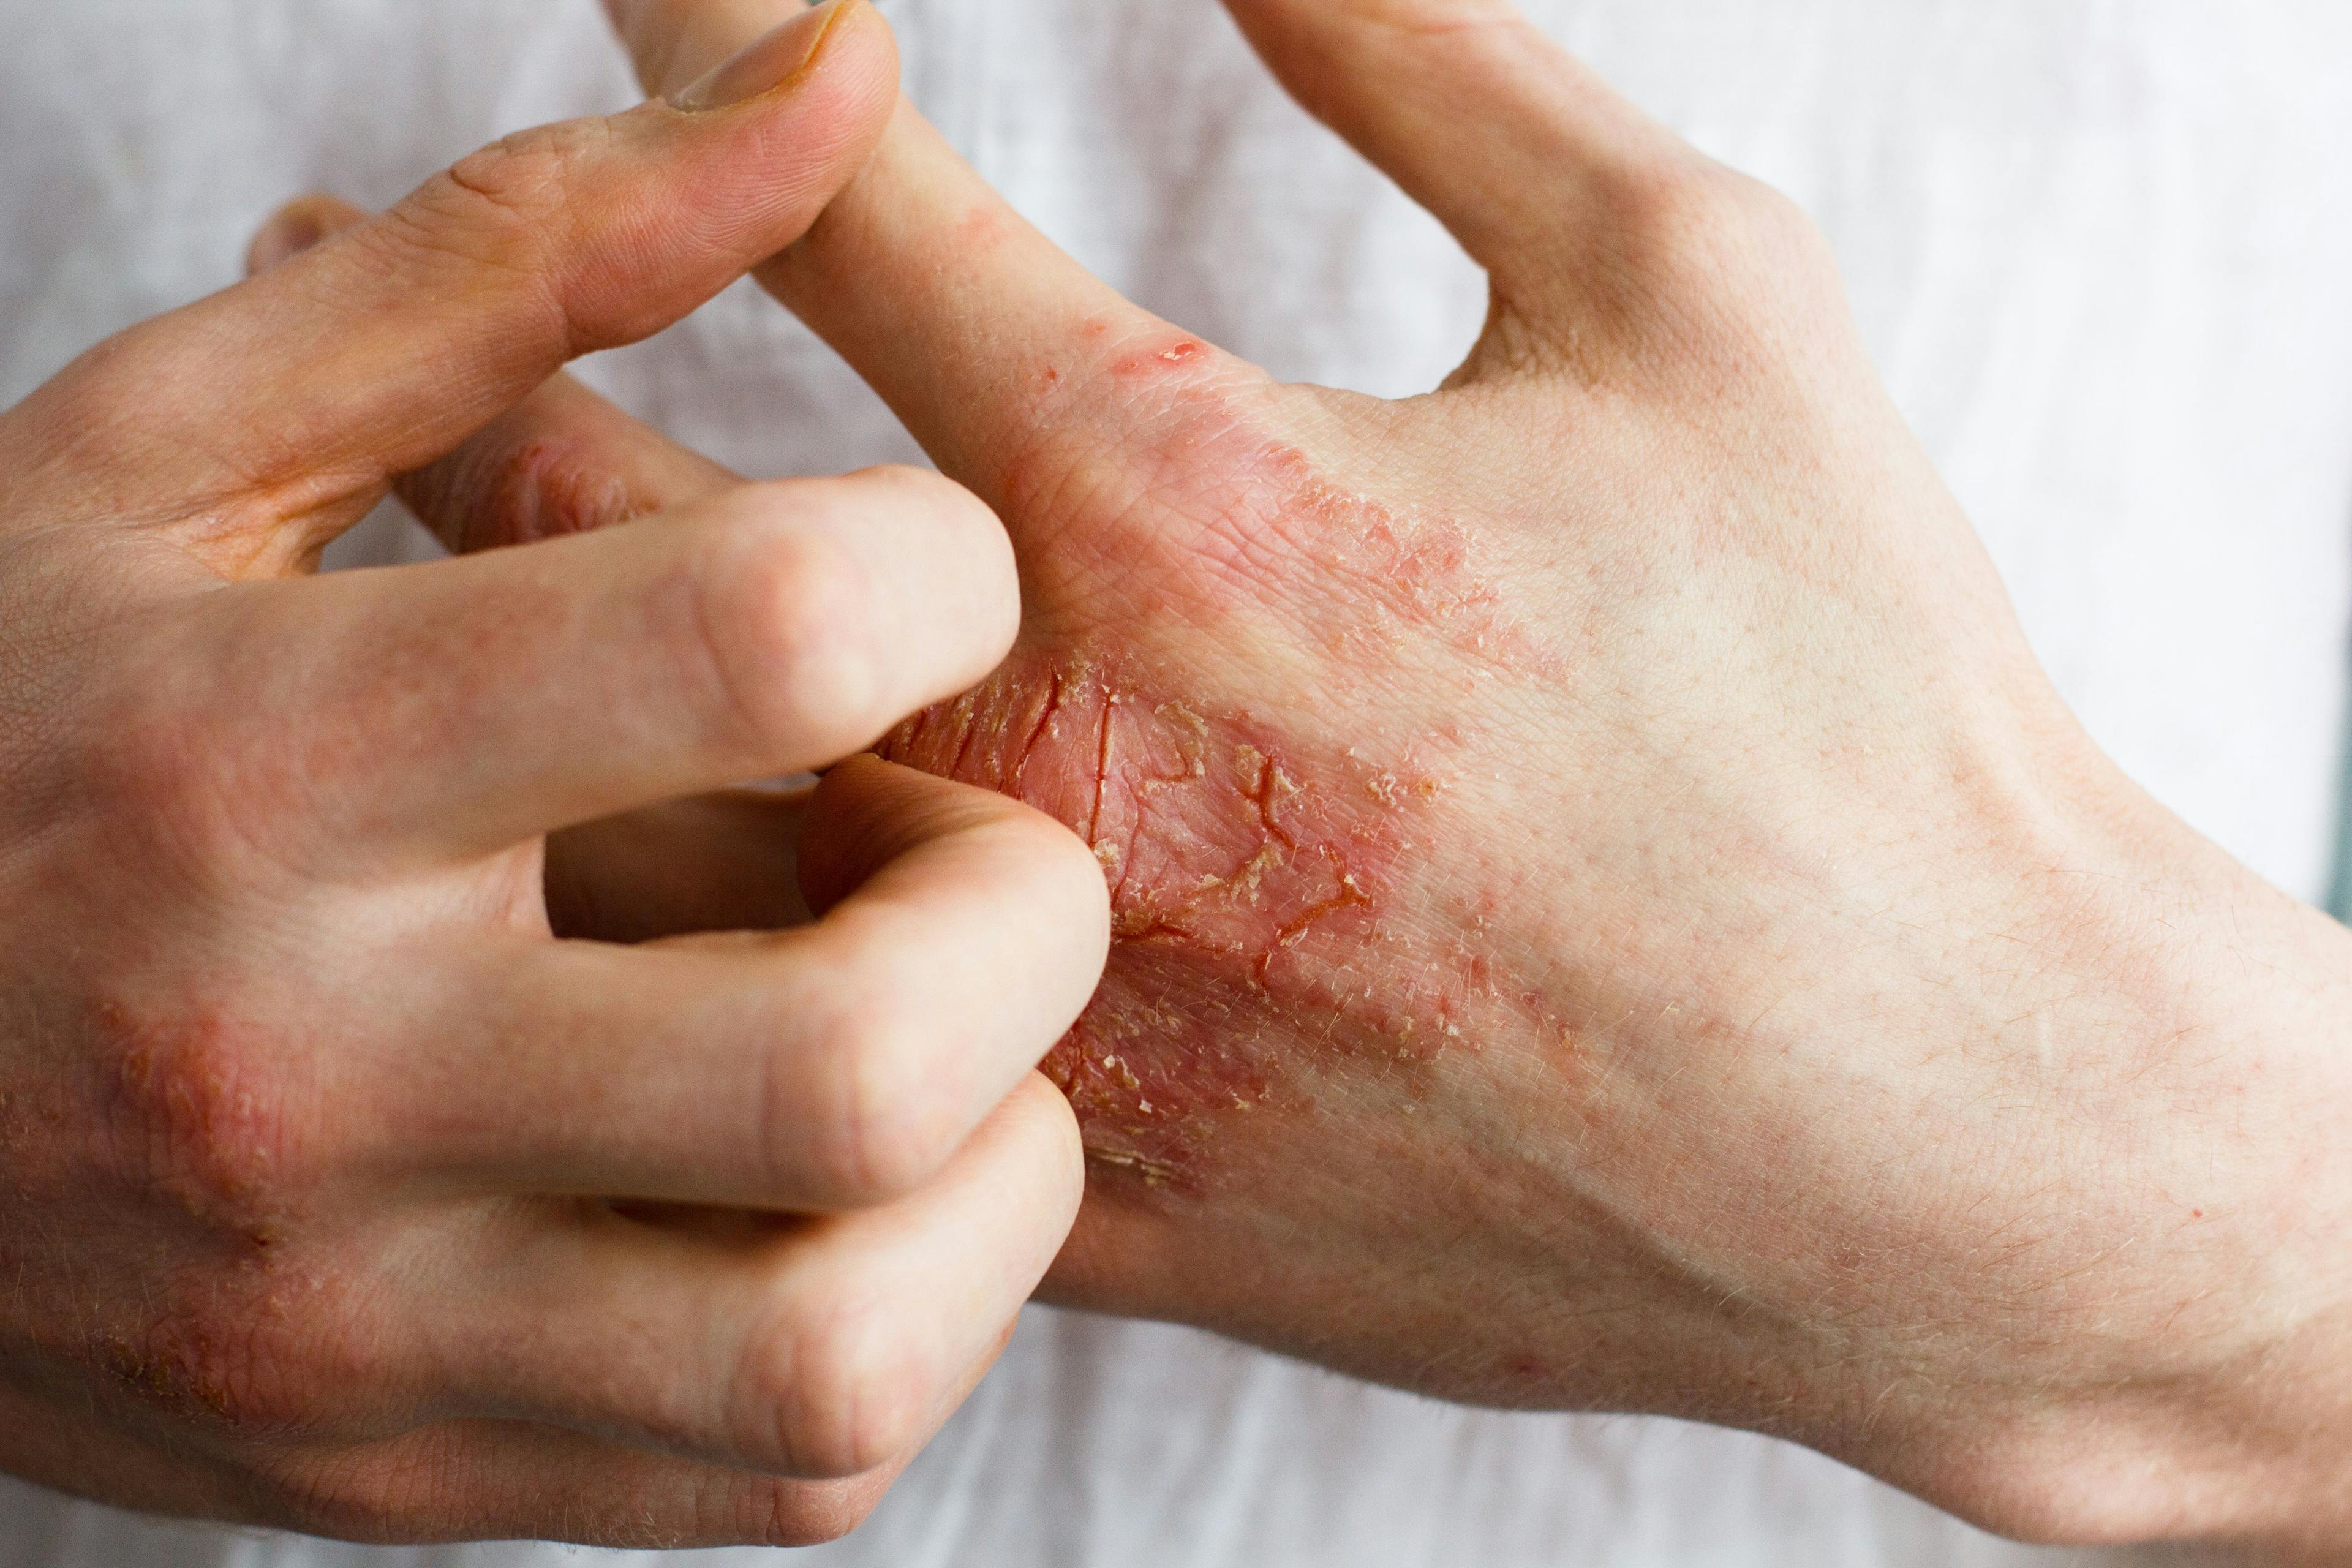 Treating Dermatitis in Healthcare Workers